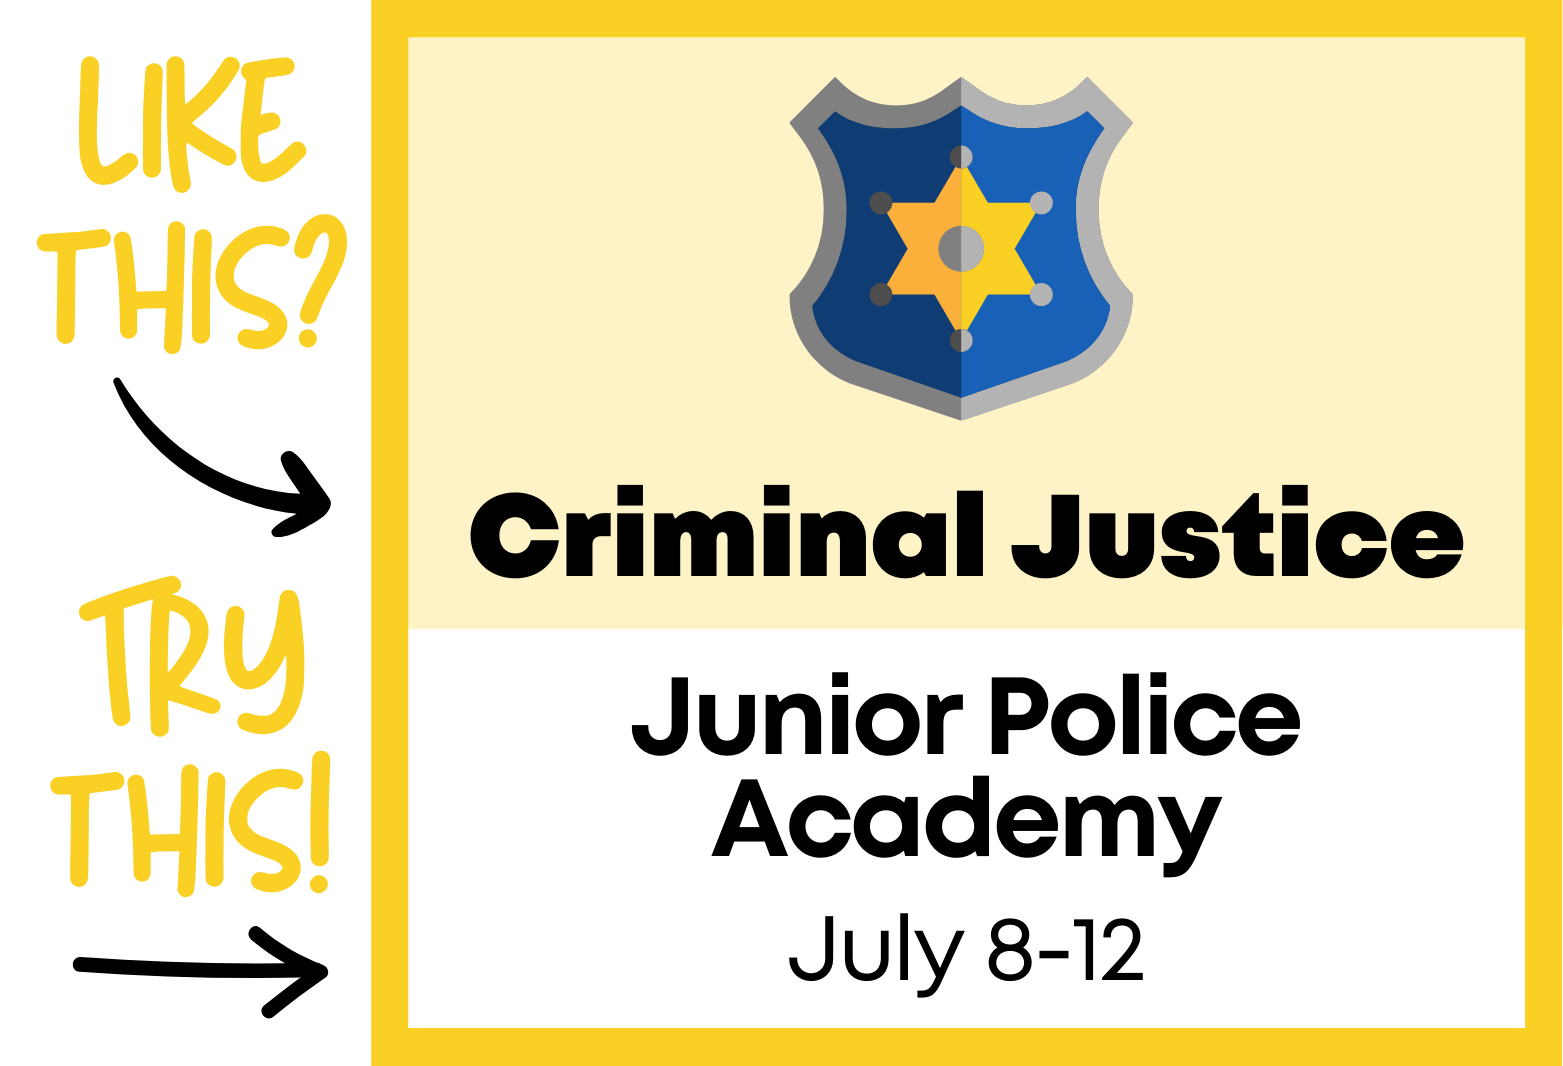 Junior Police Academy, July 8-12